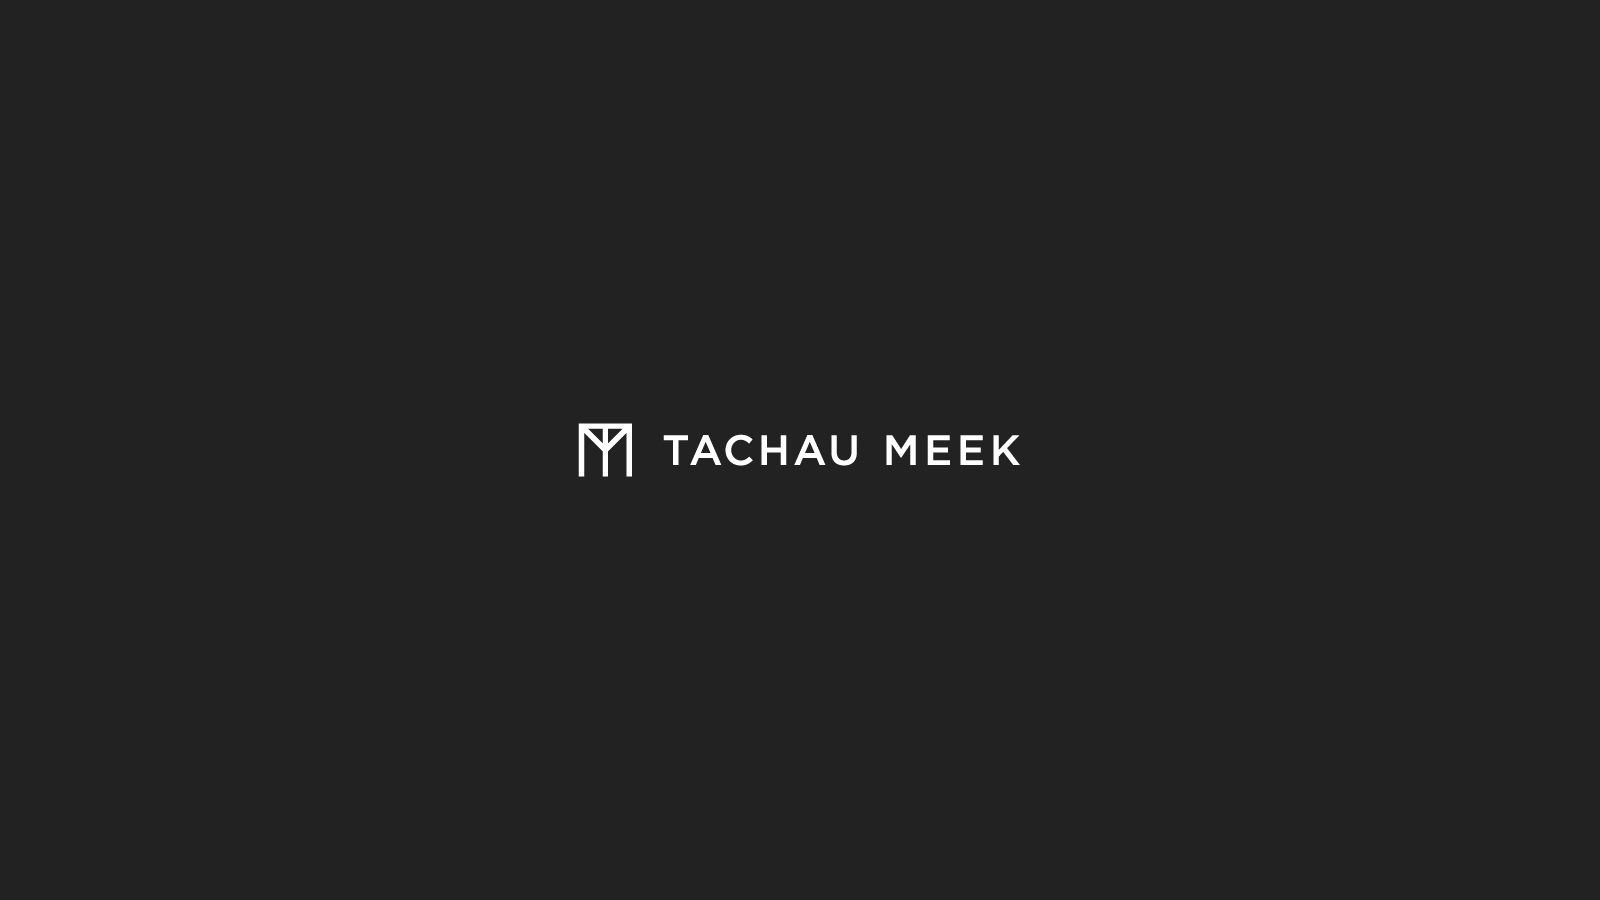 A Brand Identity for Tachau Meek by Bullhorn Creative